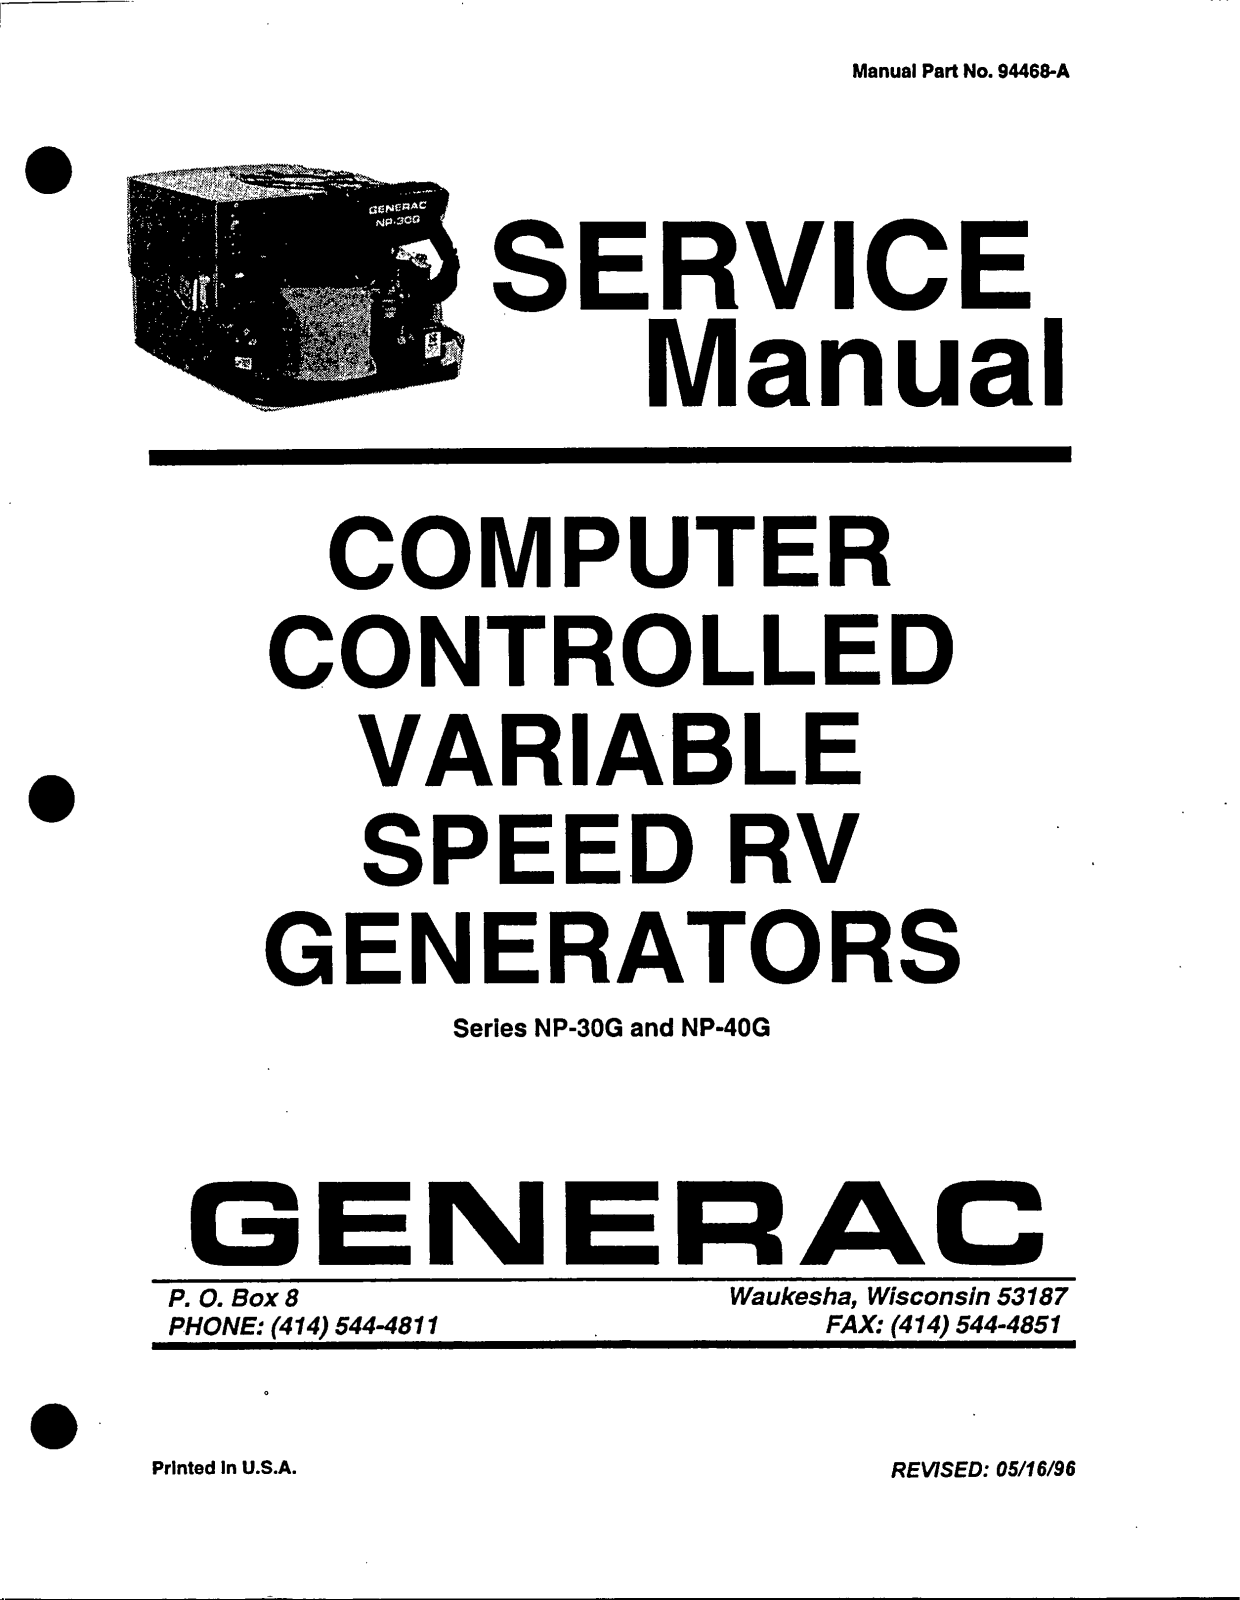 Generac NP-40G, NP-30G User Manual